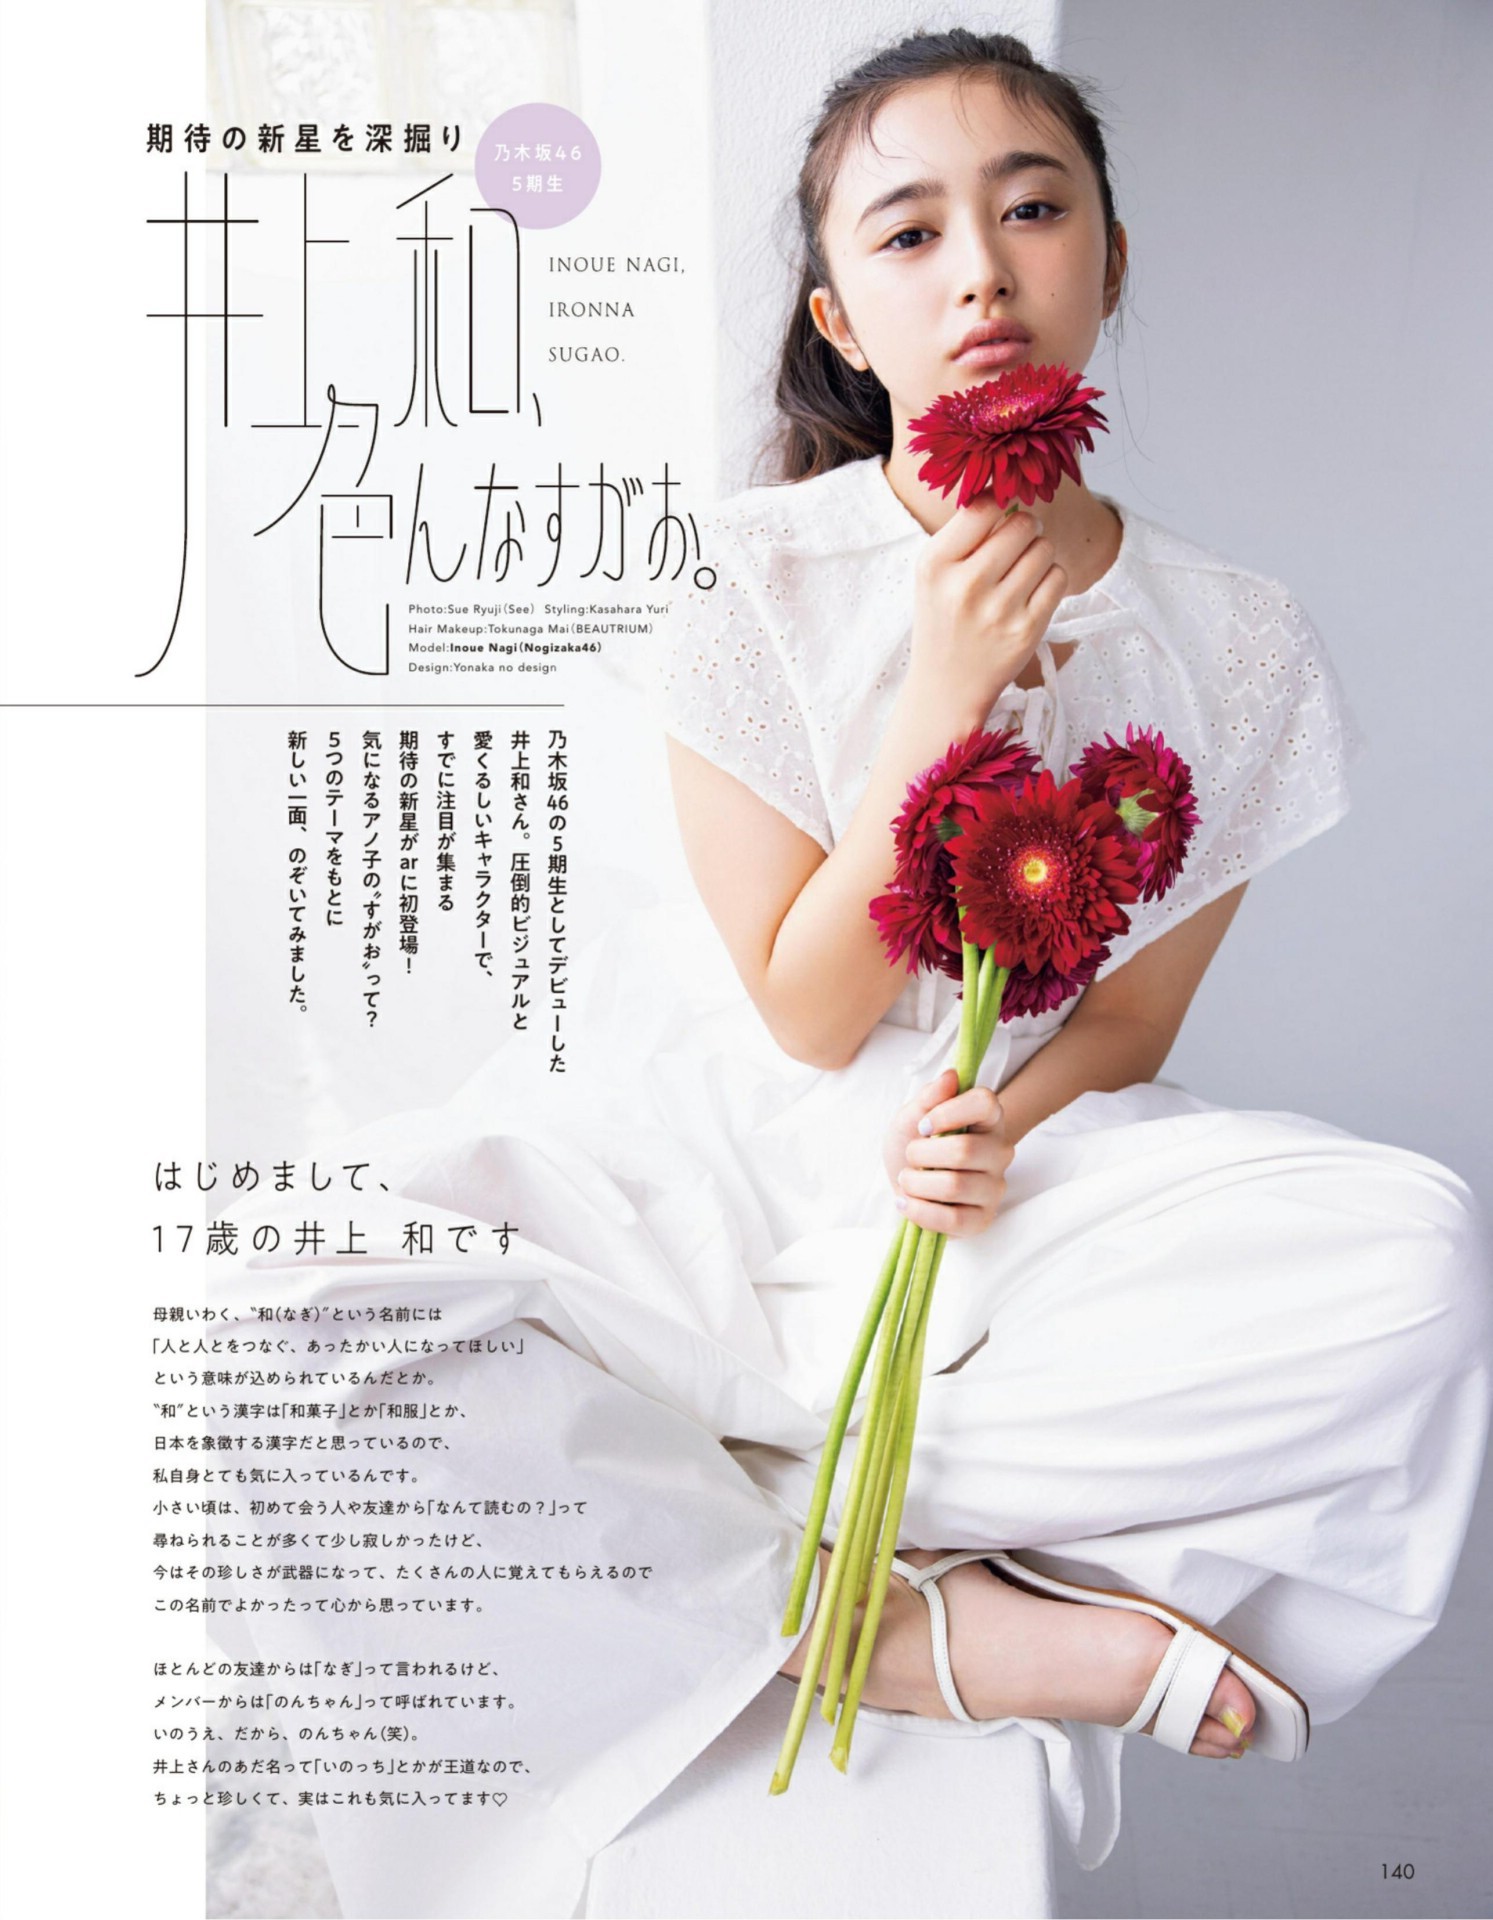 Nagi Inoue 井上和, aR (アール) Magazine 2022.09 - itotii